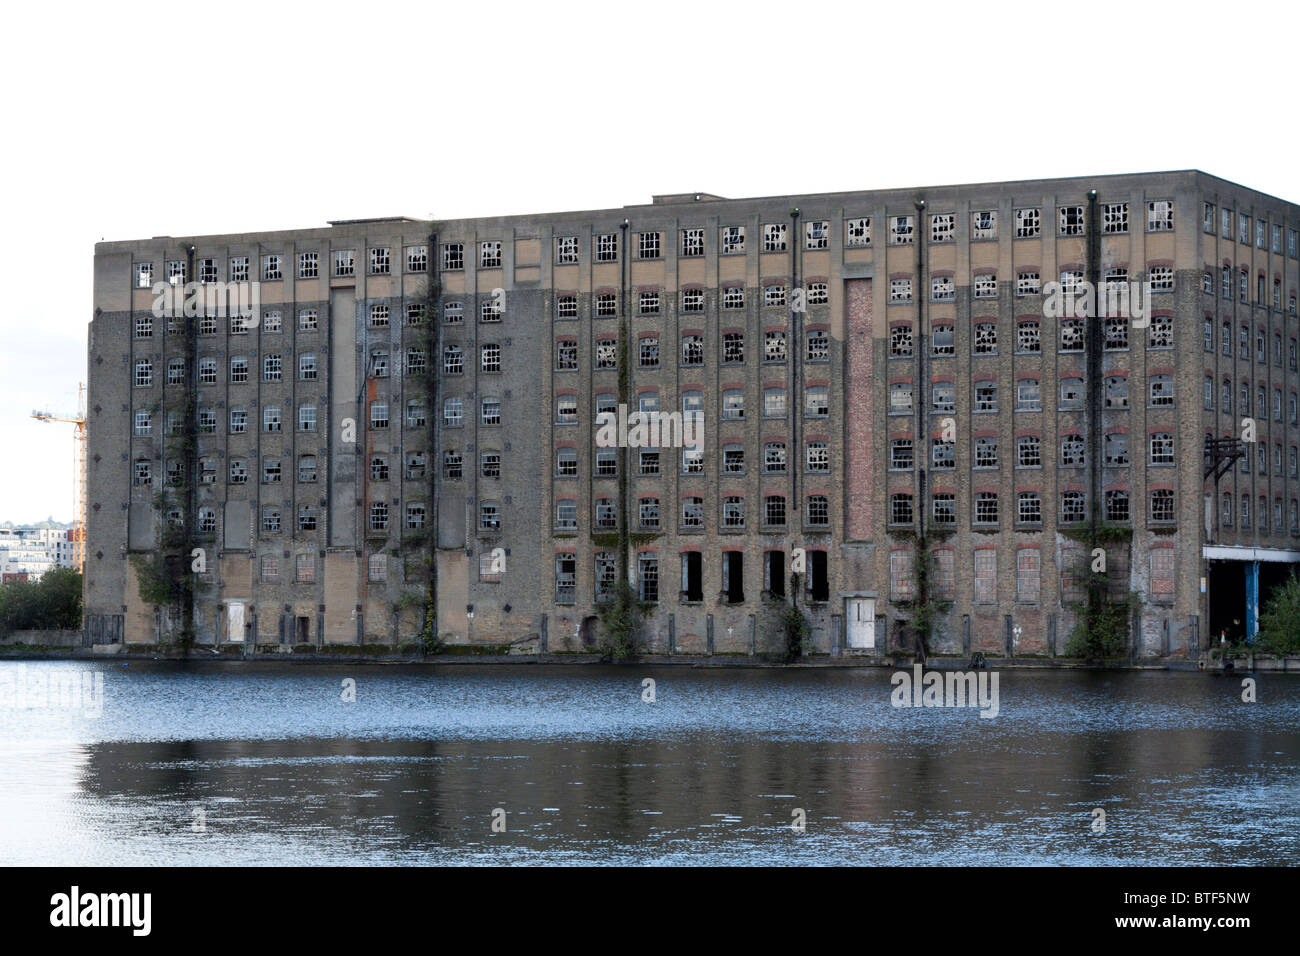 La Rank Hovis ha Premier Mill (ora demolita) - Royal Victoria Docks - Docklands - Londra Foto Stock